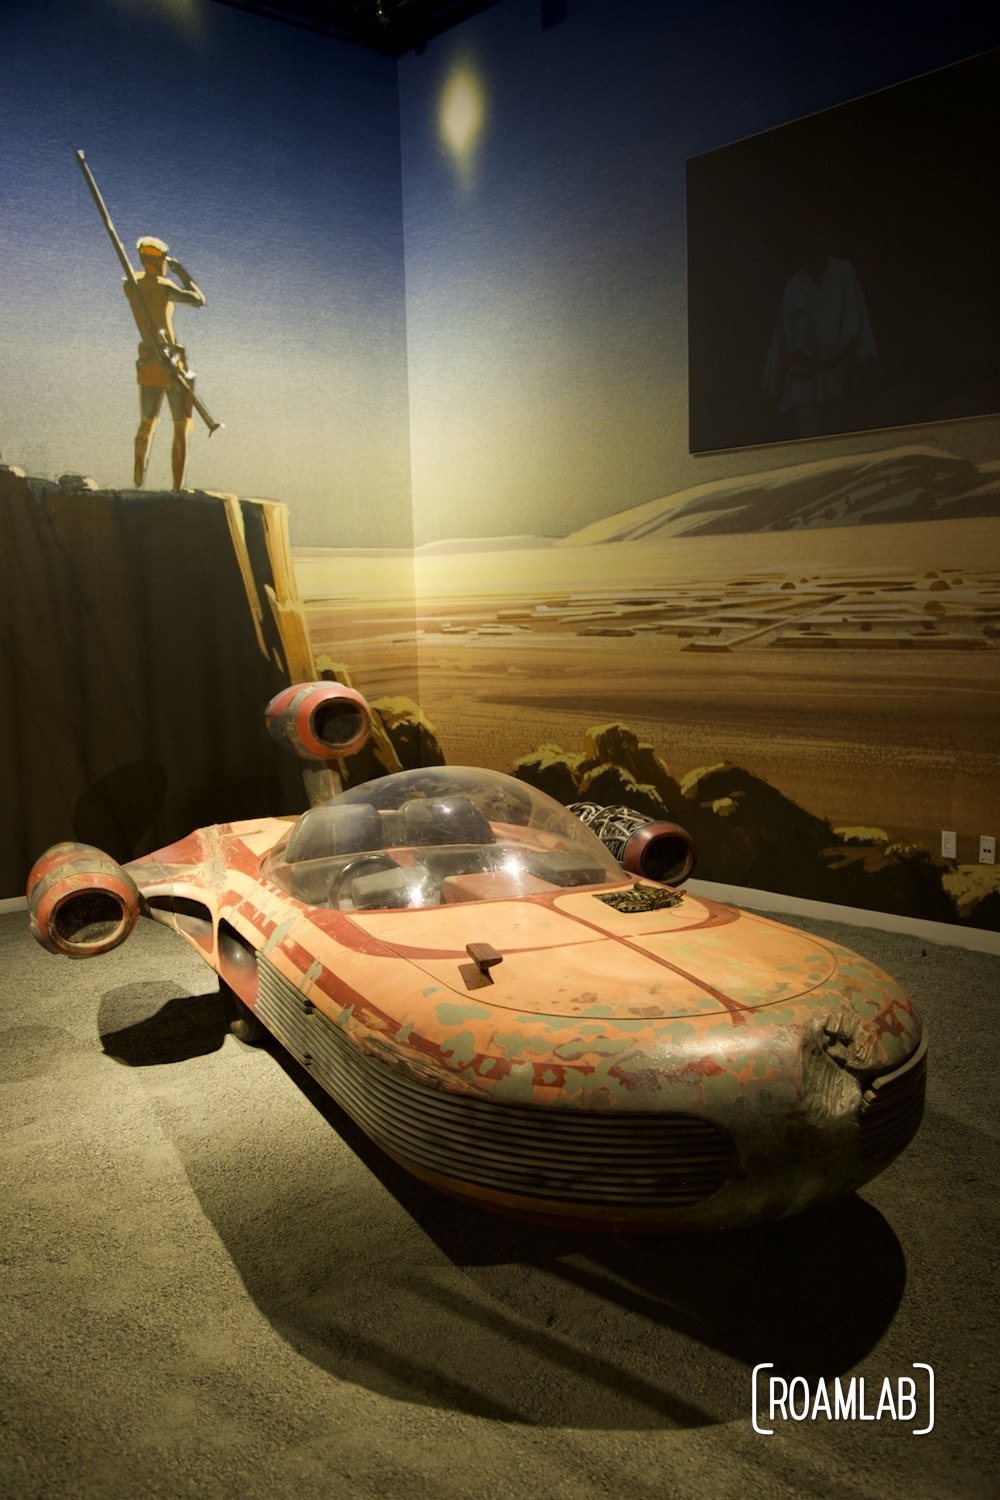 Luke Skywalker's SoroSuub X-34 landspeeder on display at the Petersen Automotive Museum